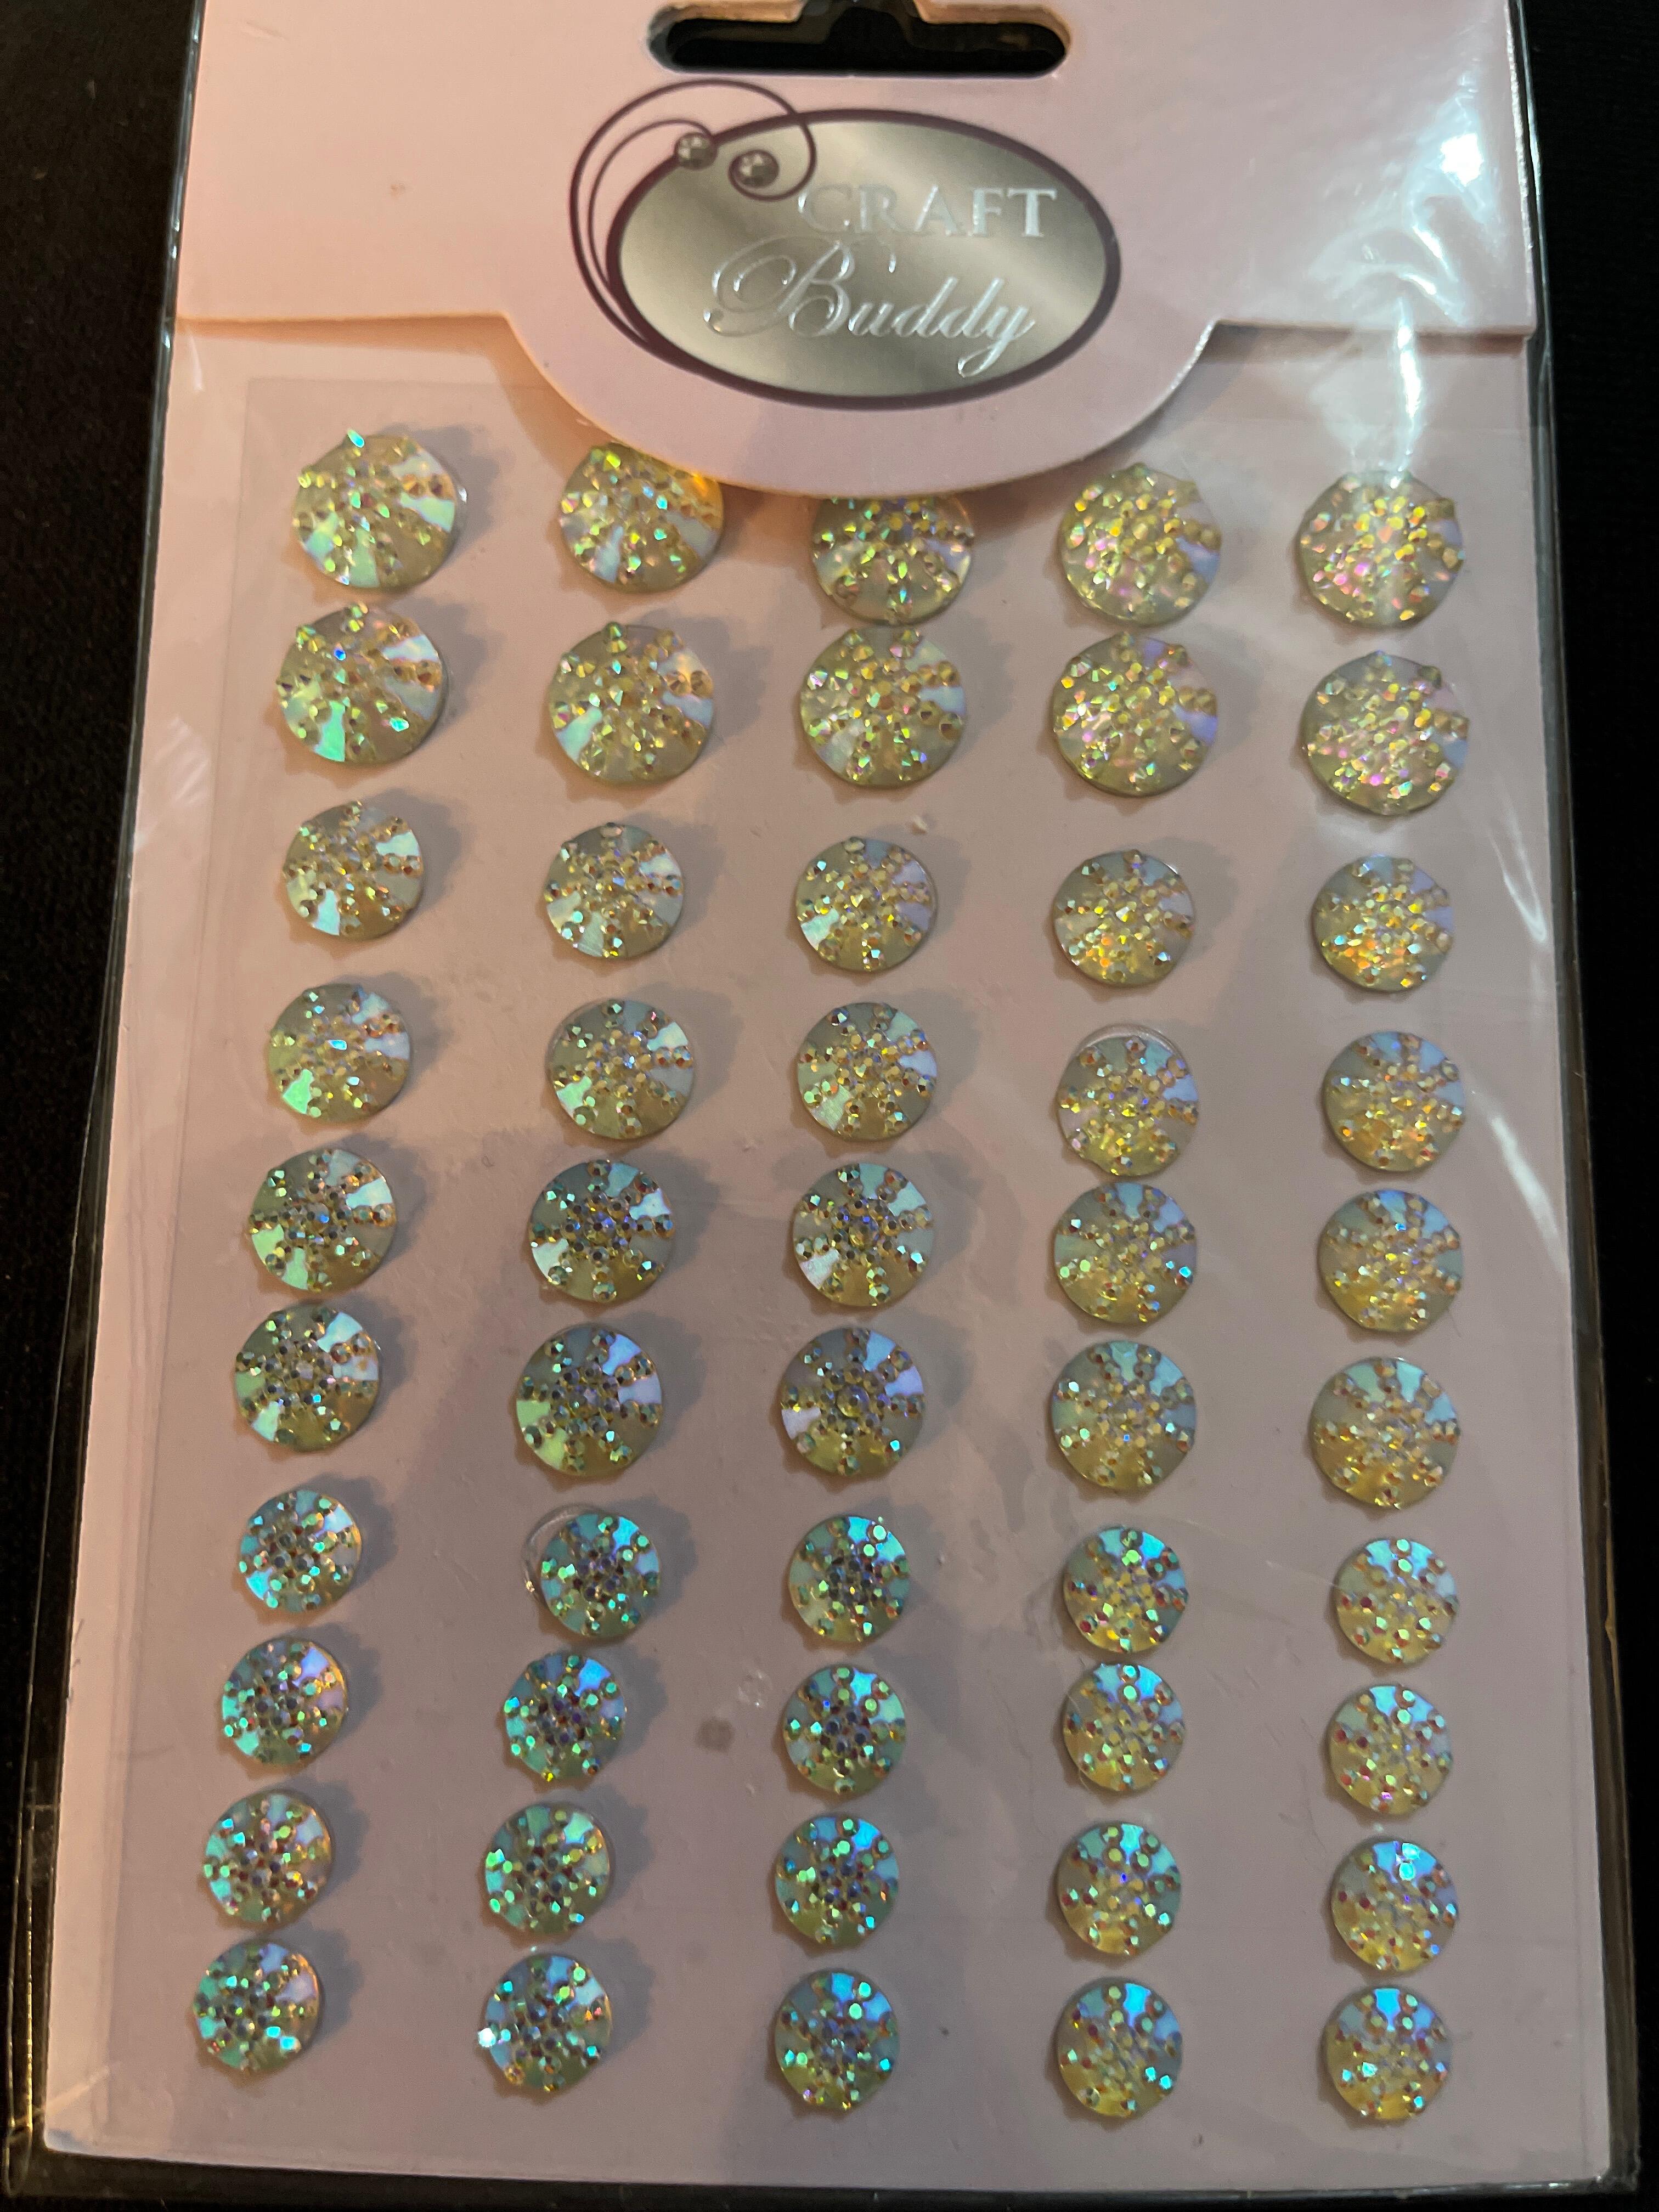 6mm Self Adhesive Glitter Crystal Gem Jewels Sticker Diamante Rhinestone 504 Pcs, Clear